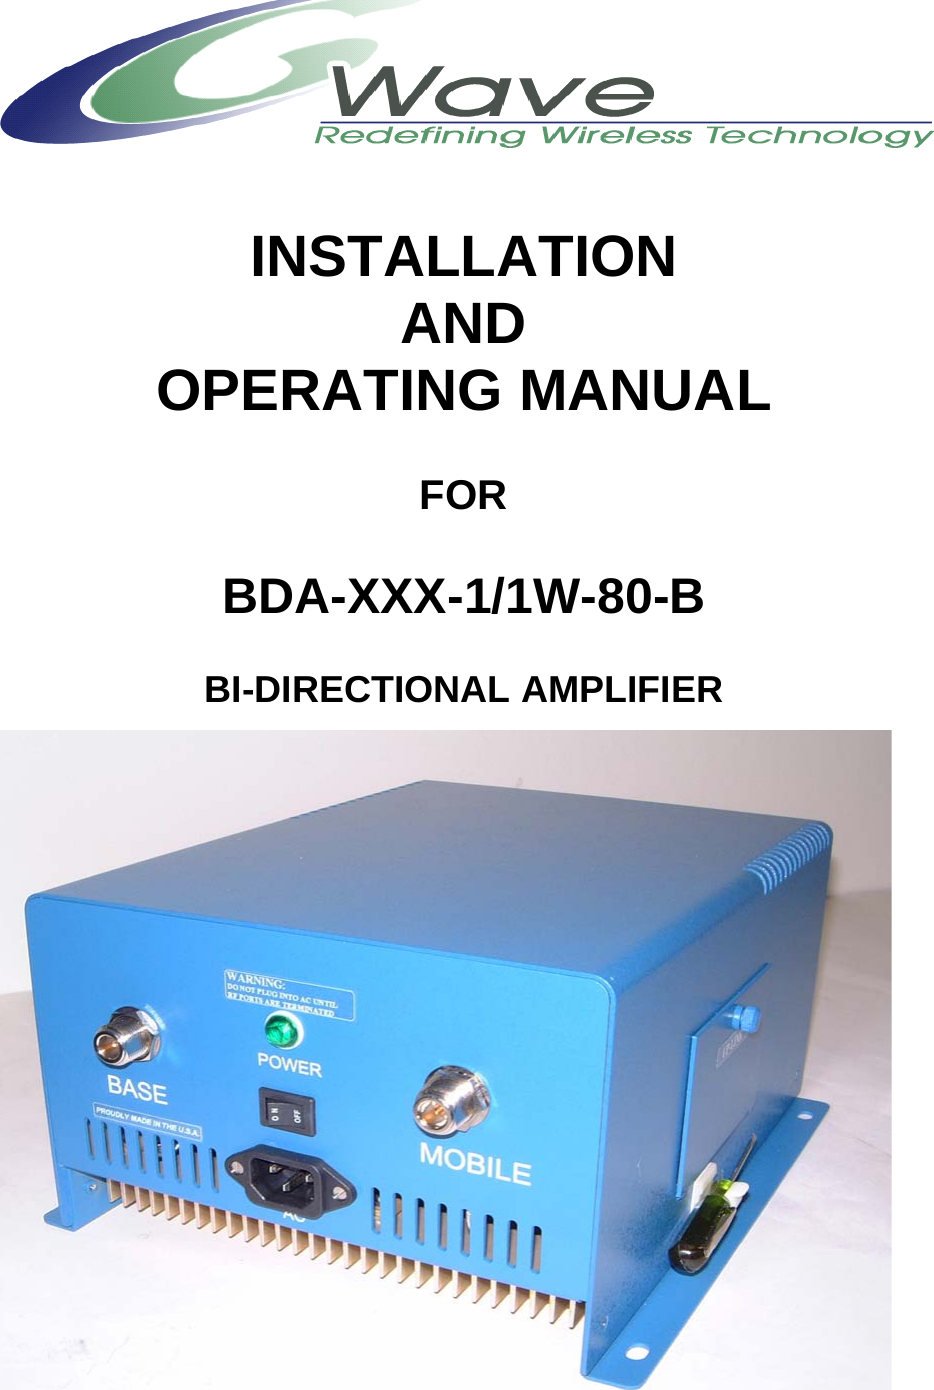     INSTALLATION AND OPERATING MANUAL  FOR  BDA-XXX-1/1W-80-B  BI-DIRECTIONAL AMPLIFIER     